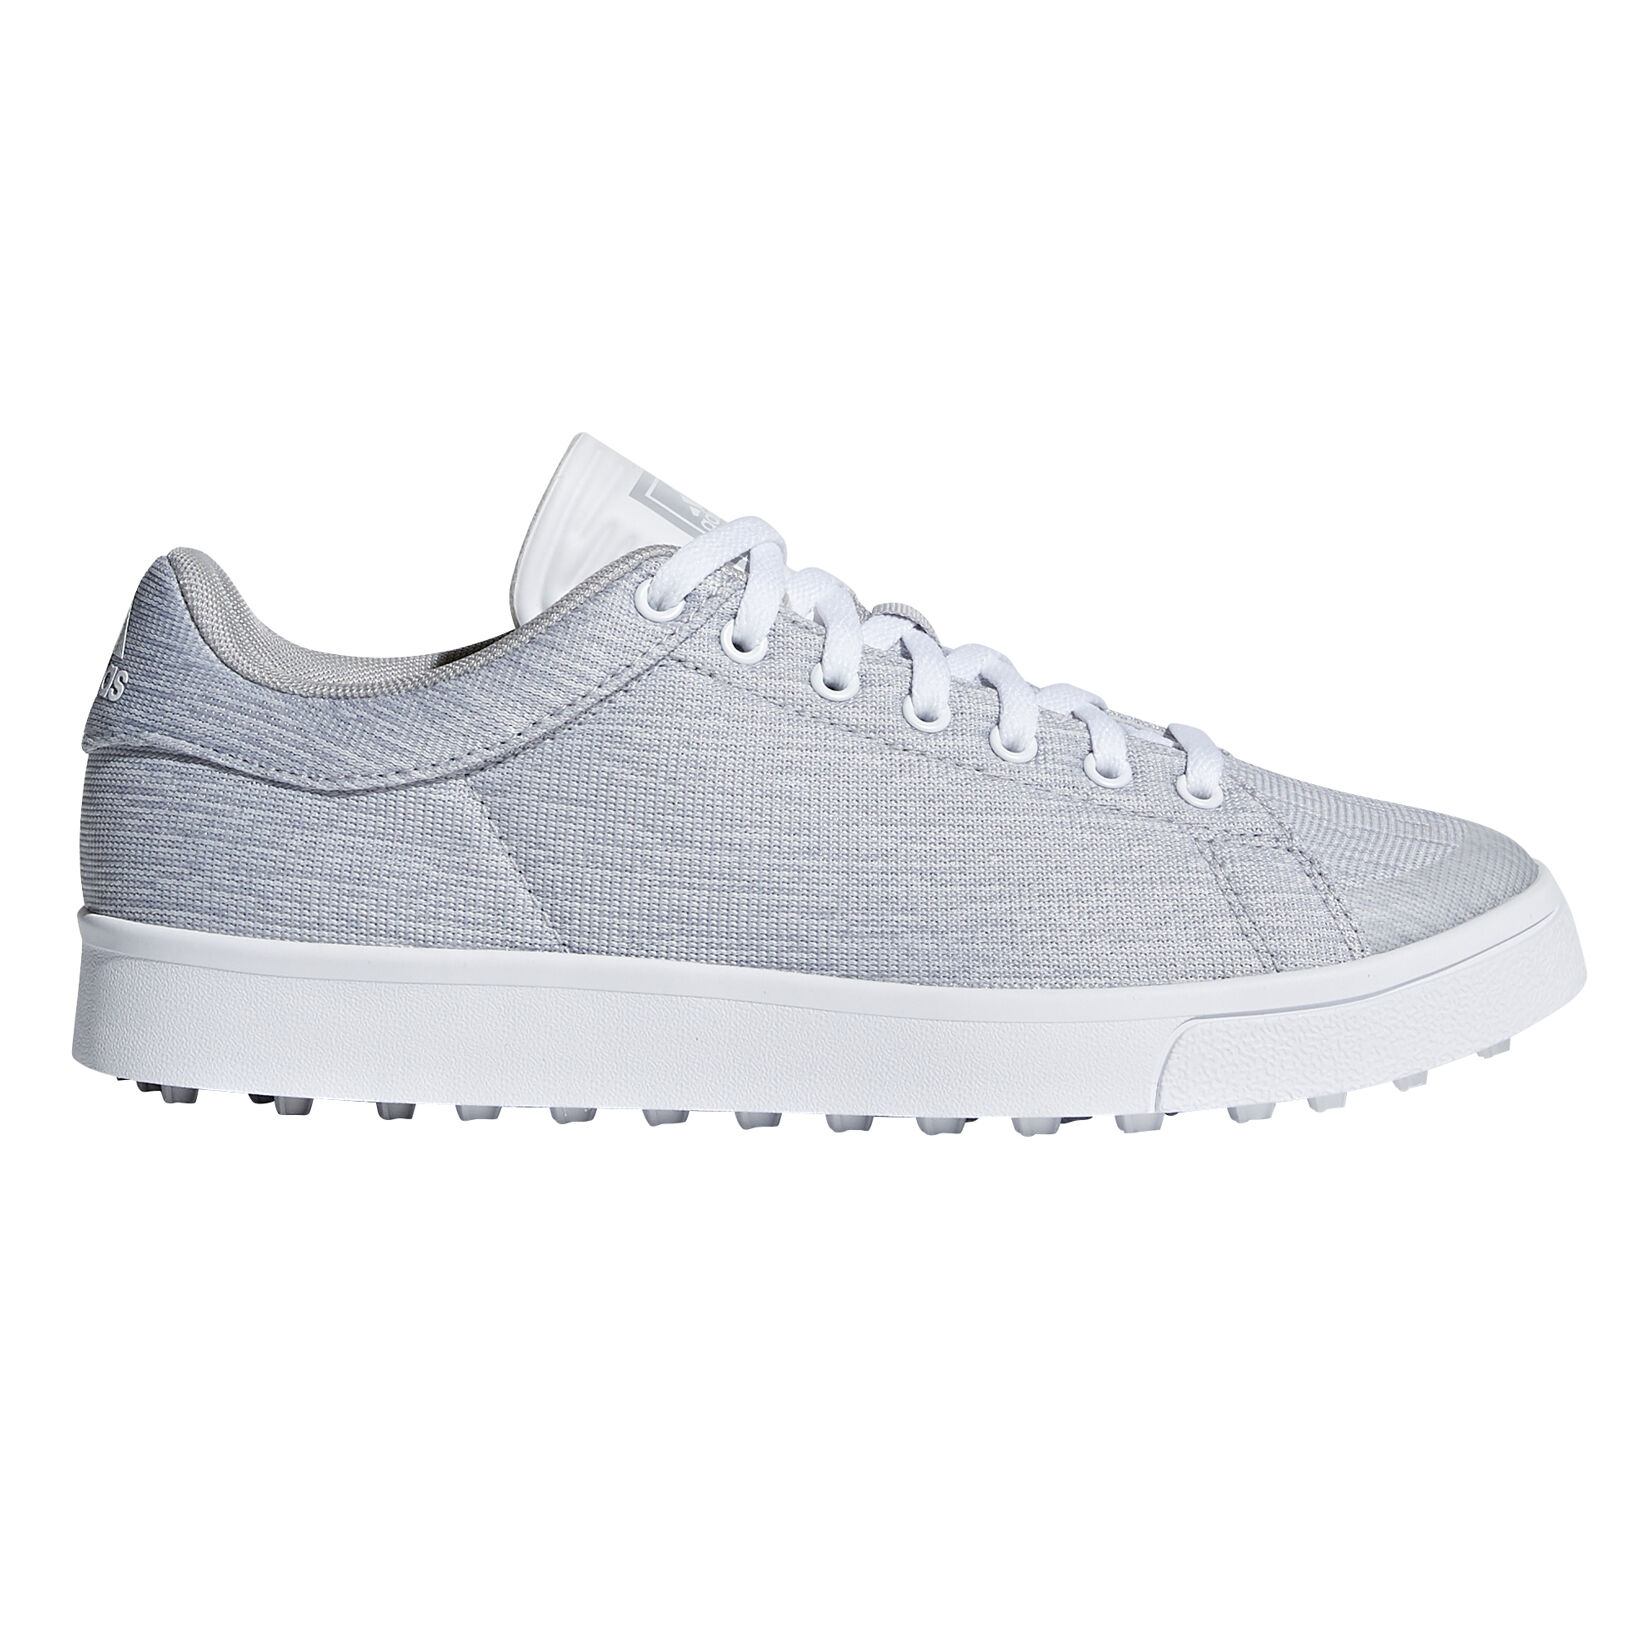 adidas adicross golf shoes grey